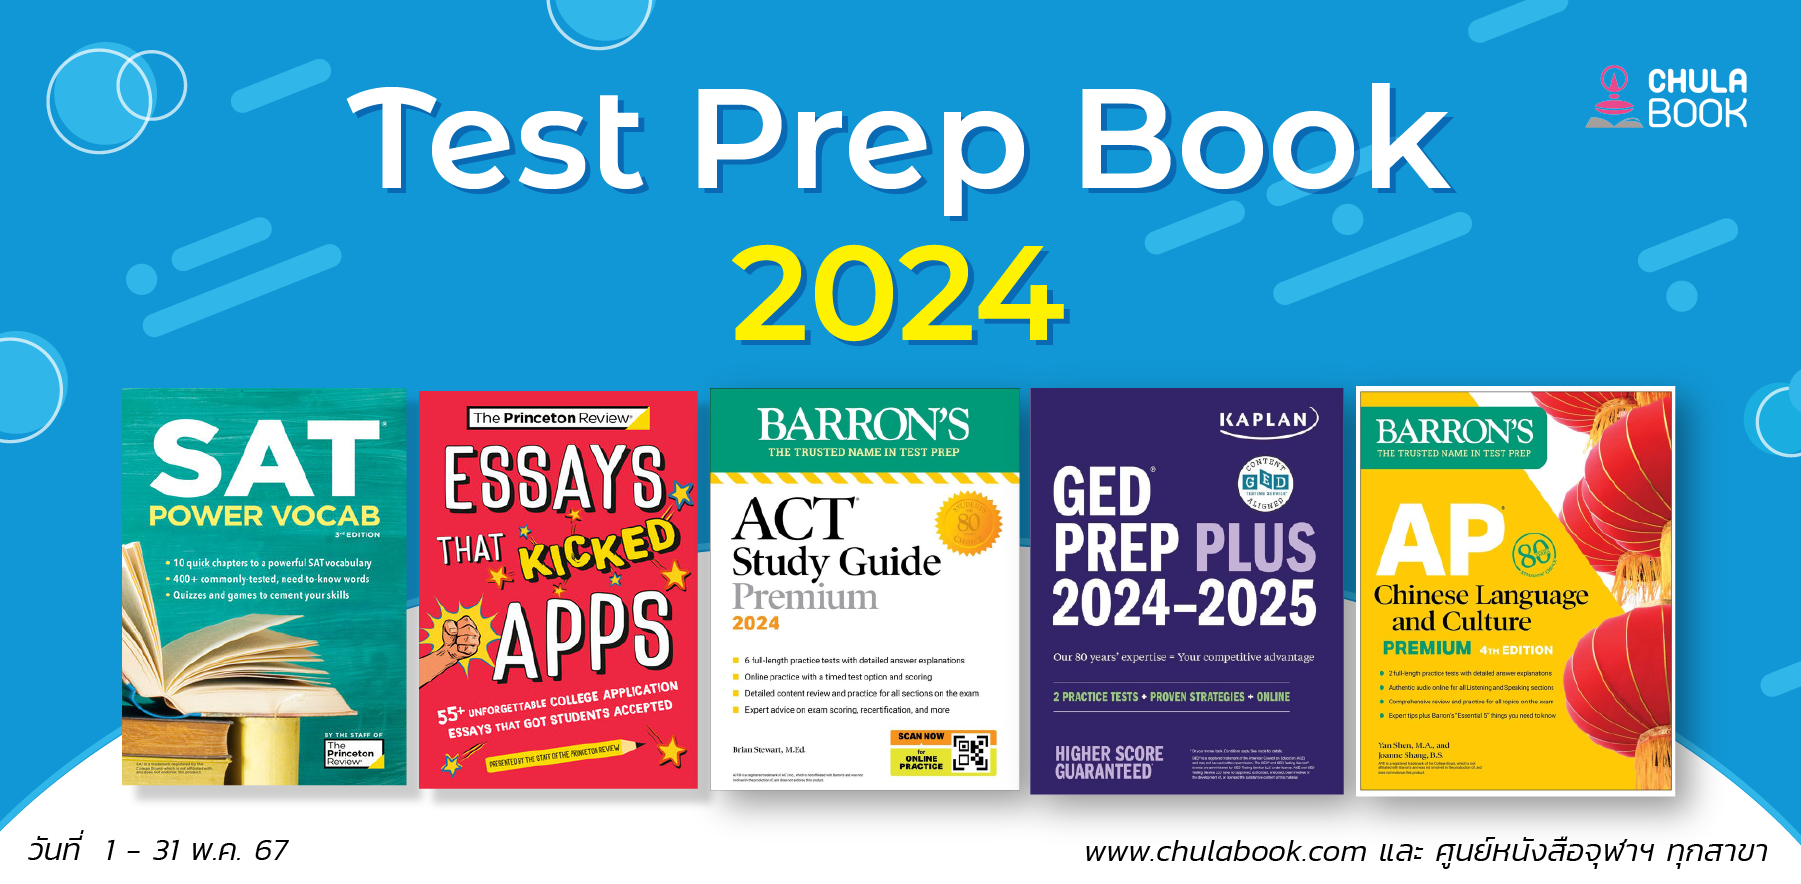 Test Prep Books 2024